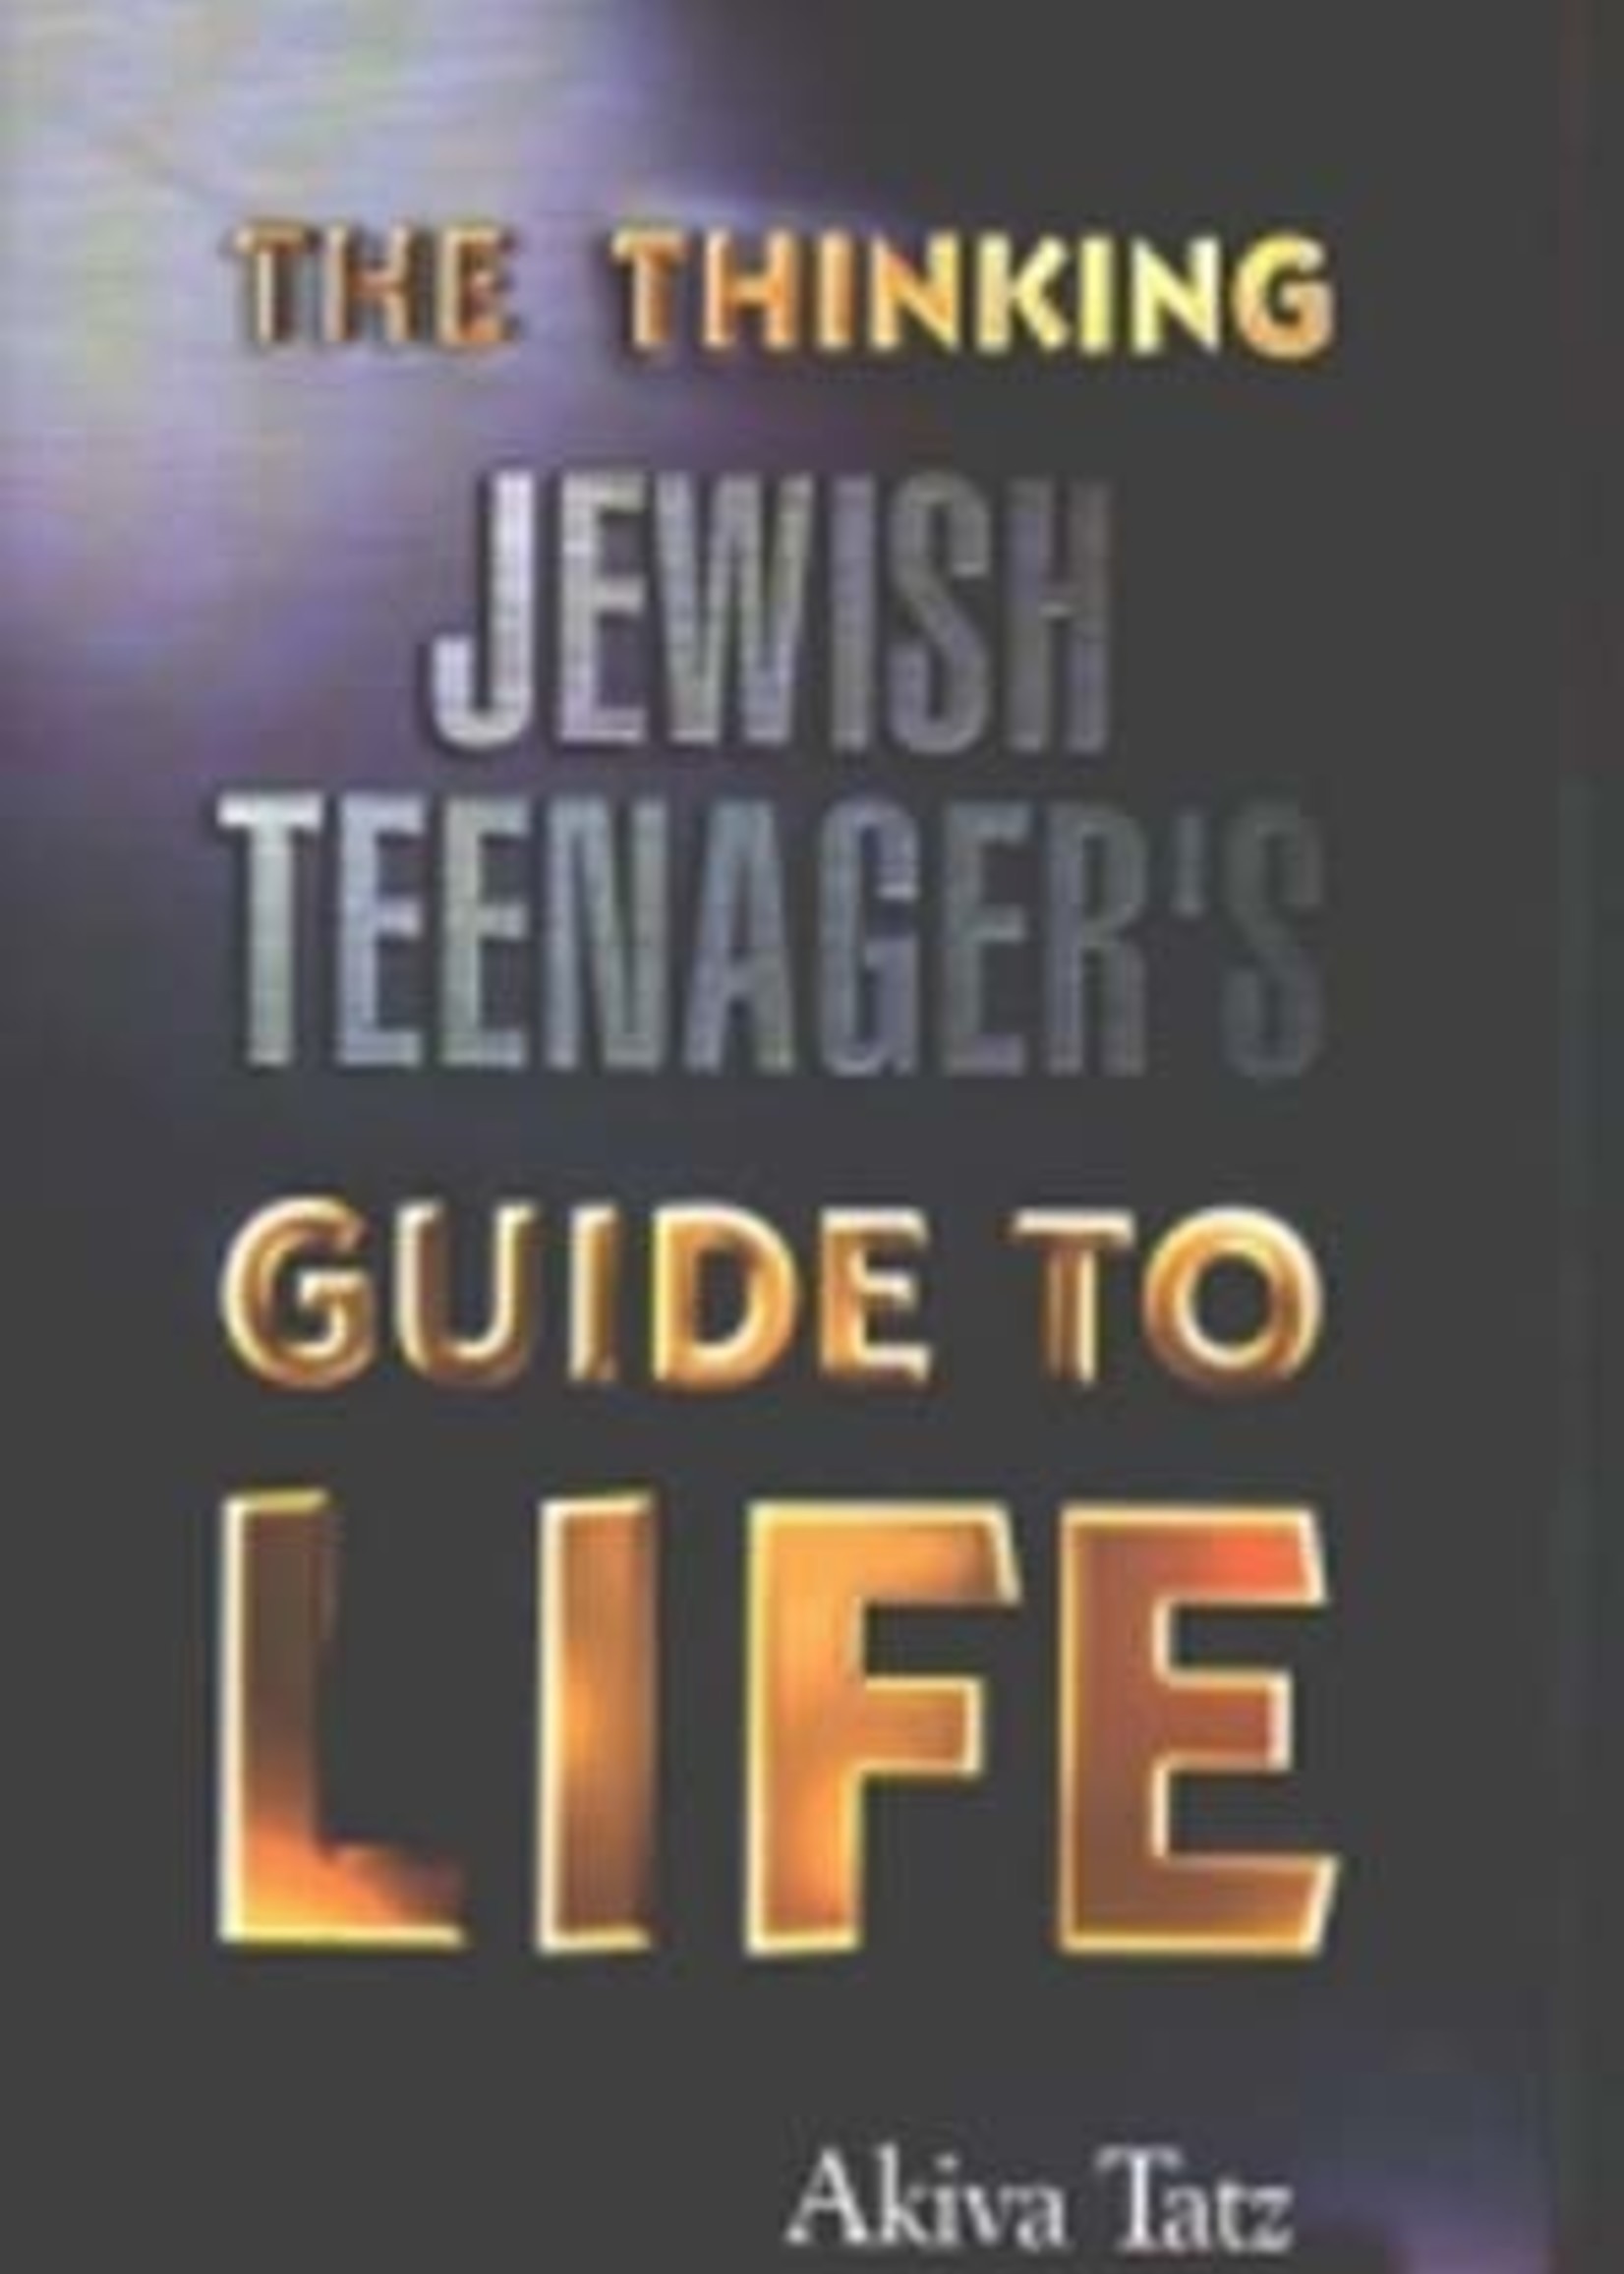 The Thinking Jewish Teenager's Guide to Life : Rabbi Akiva Tatz